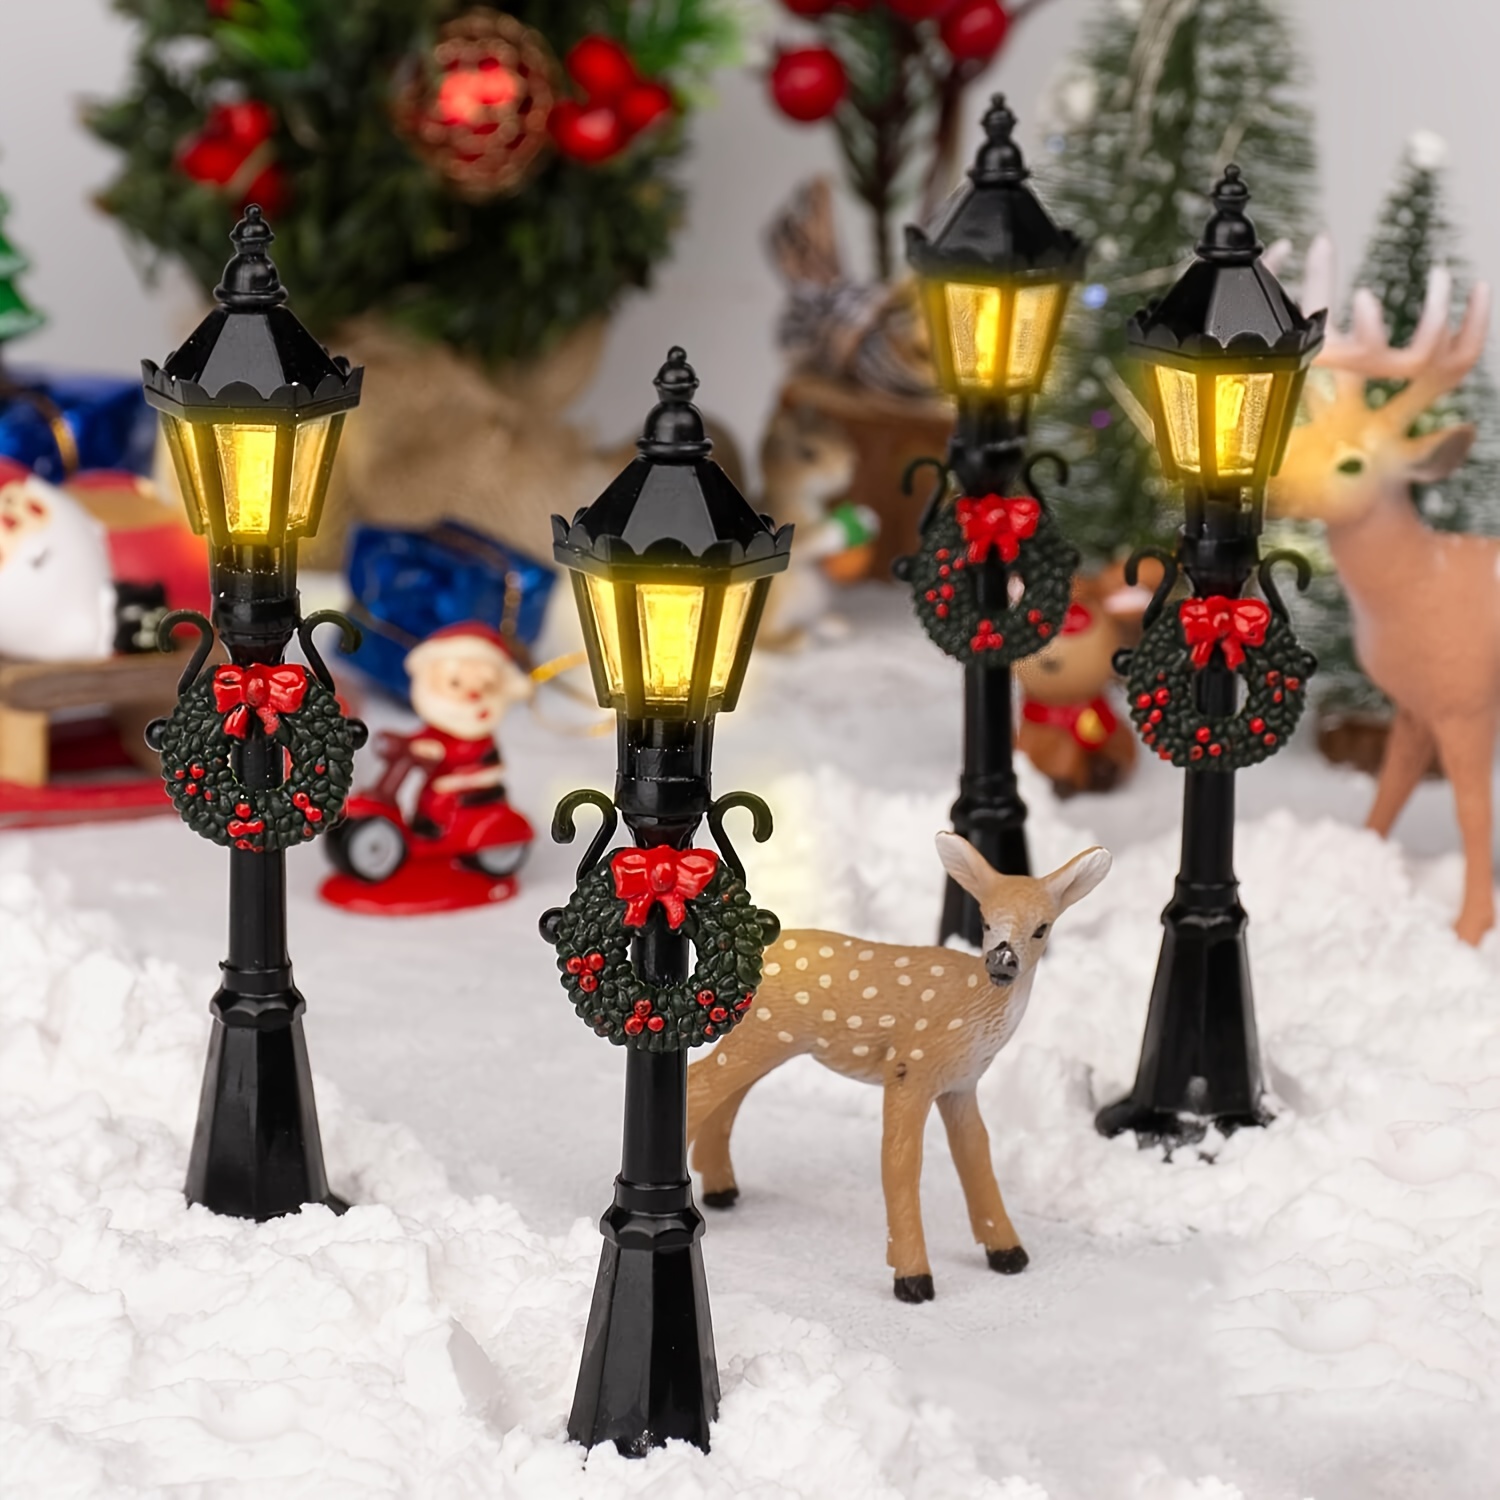 Christmas Reindeers Lamp Miniature Christmas Decorations Village